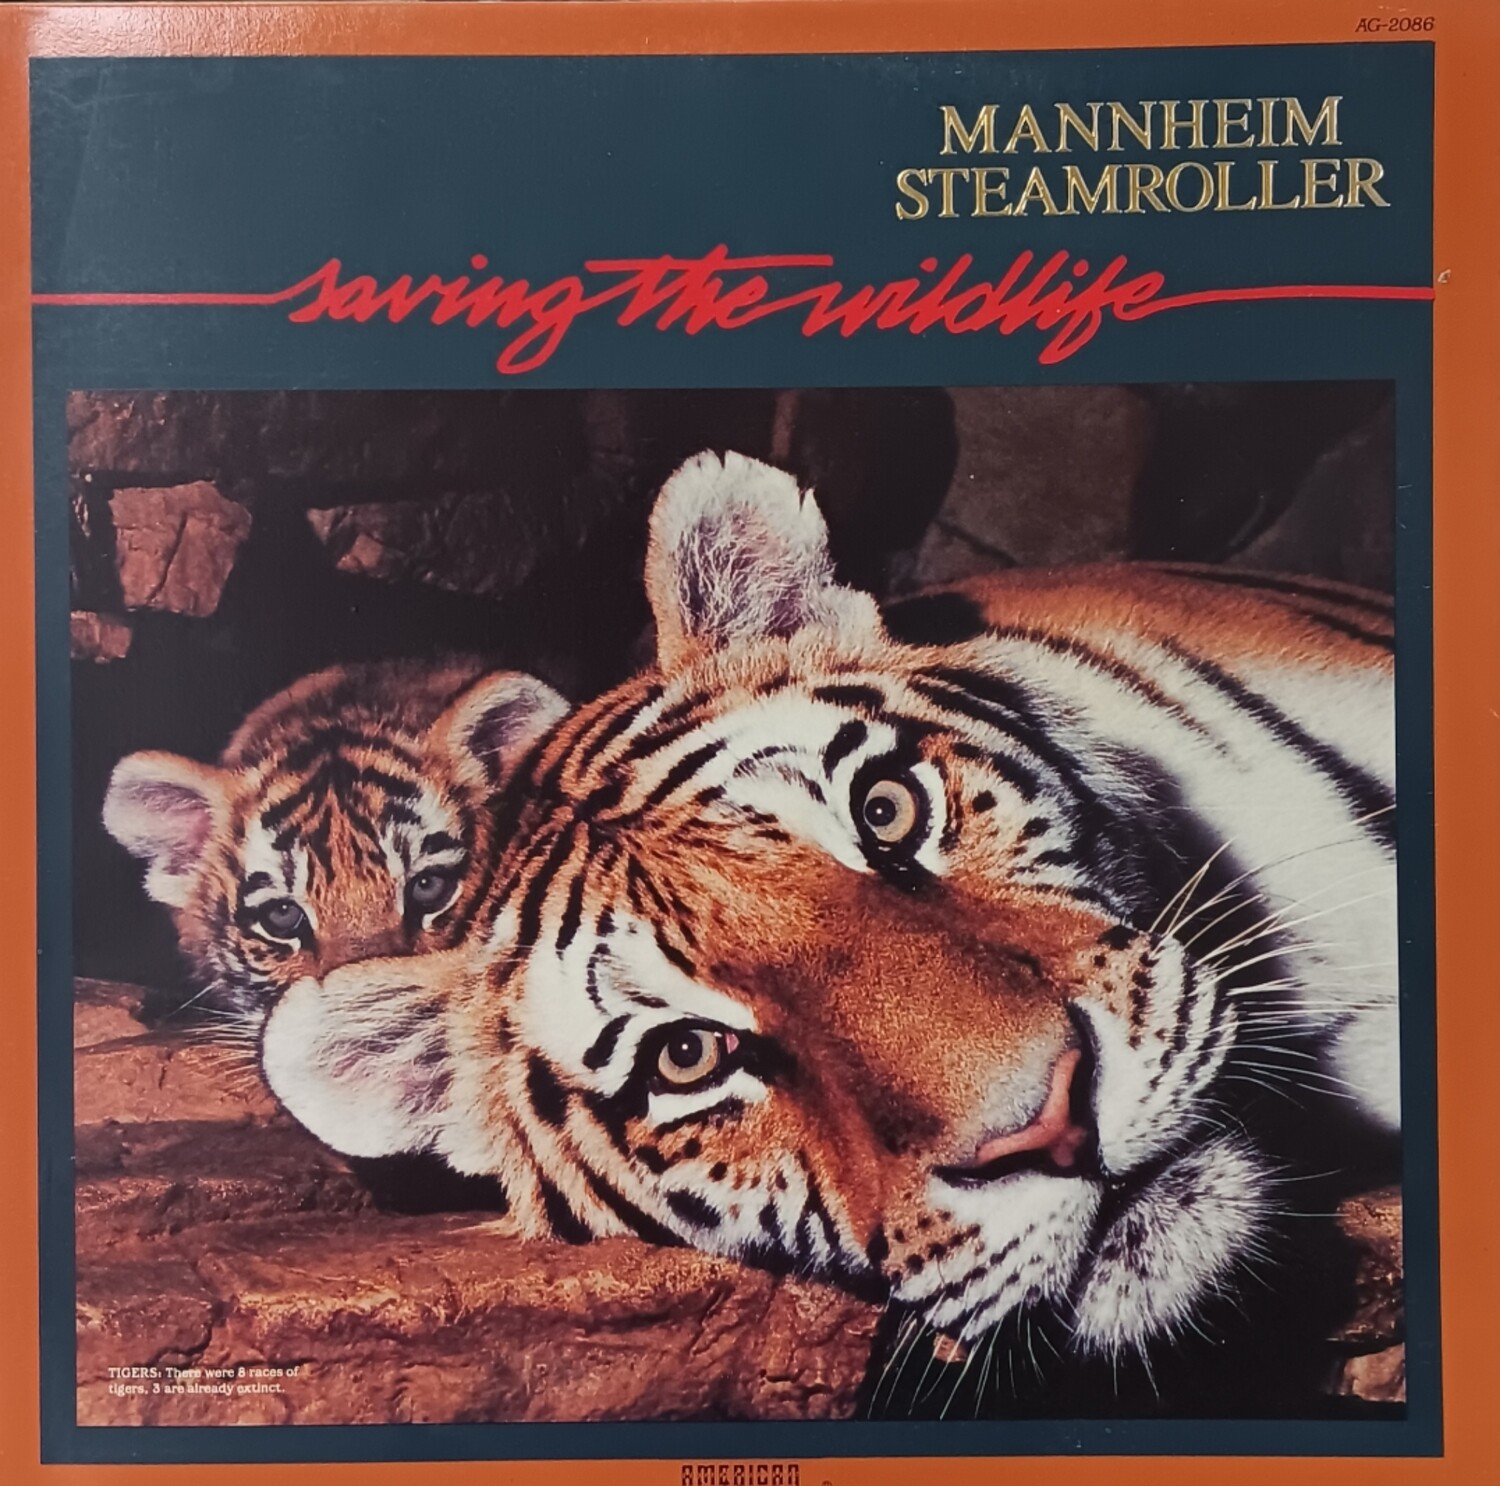 Mannheim Steamroller - Saving the wildlife